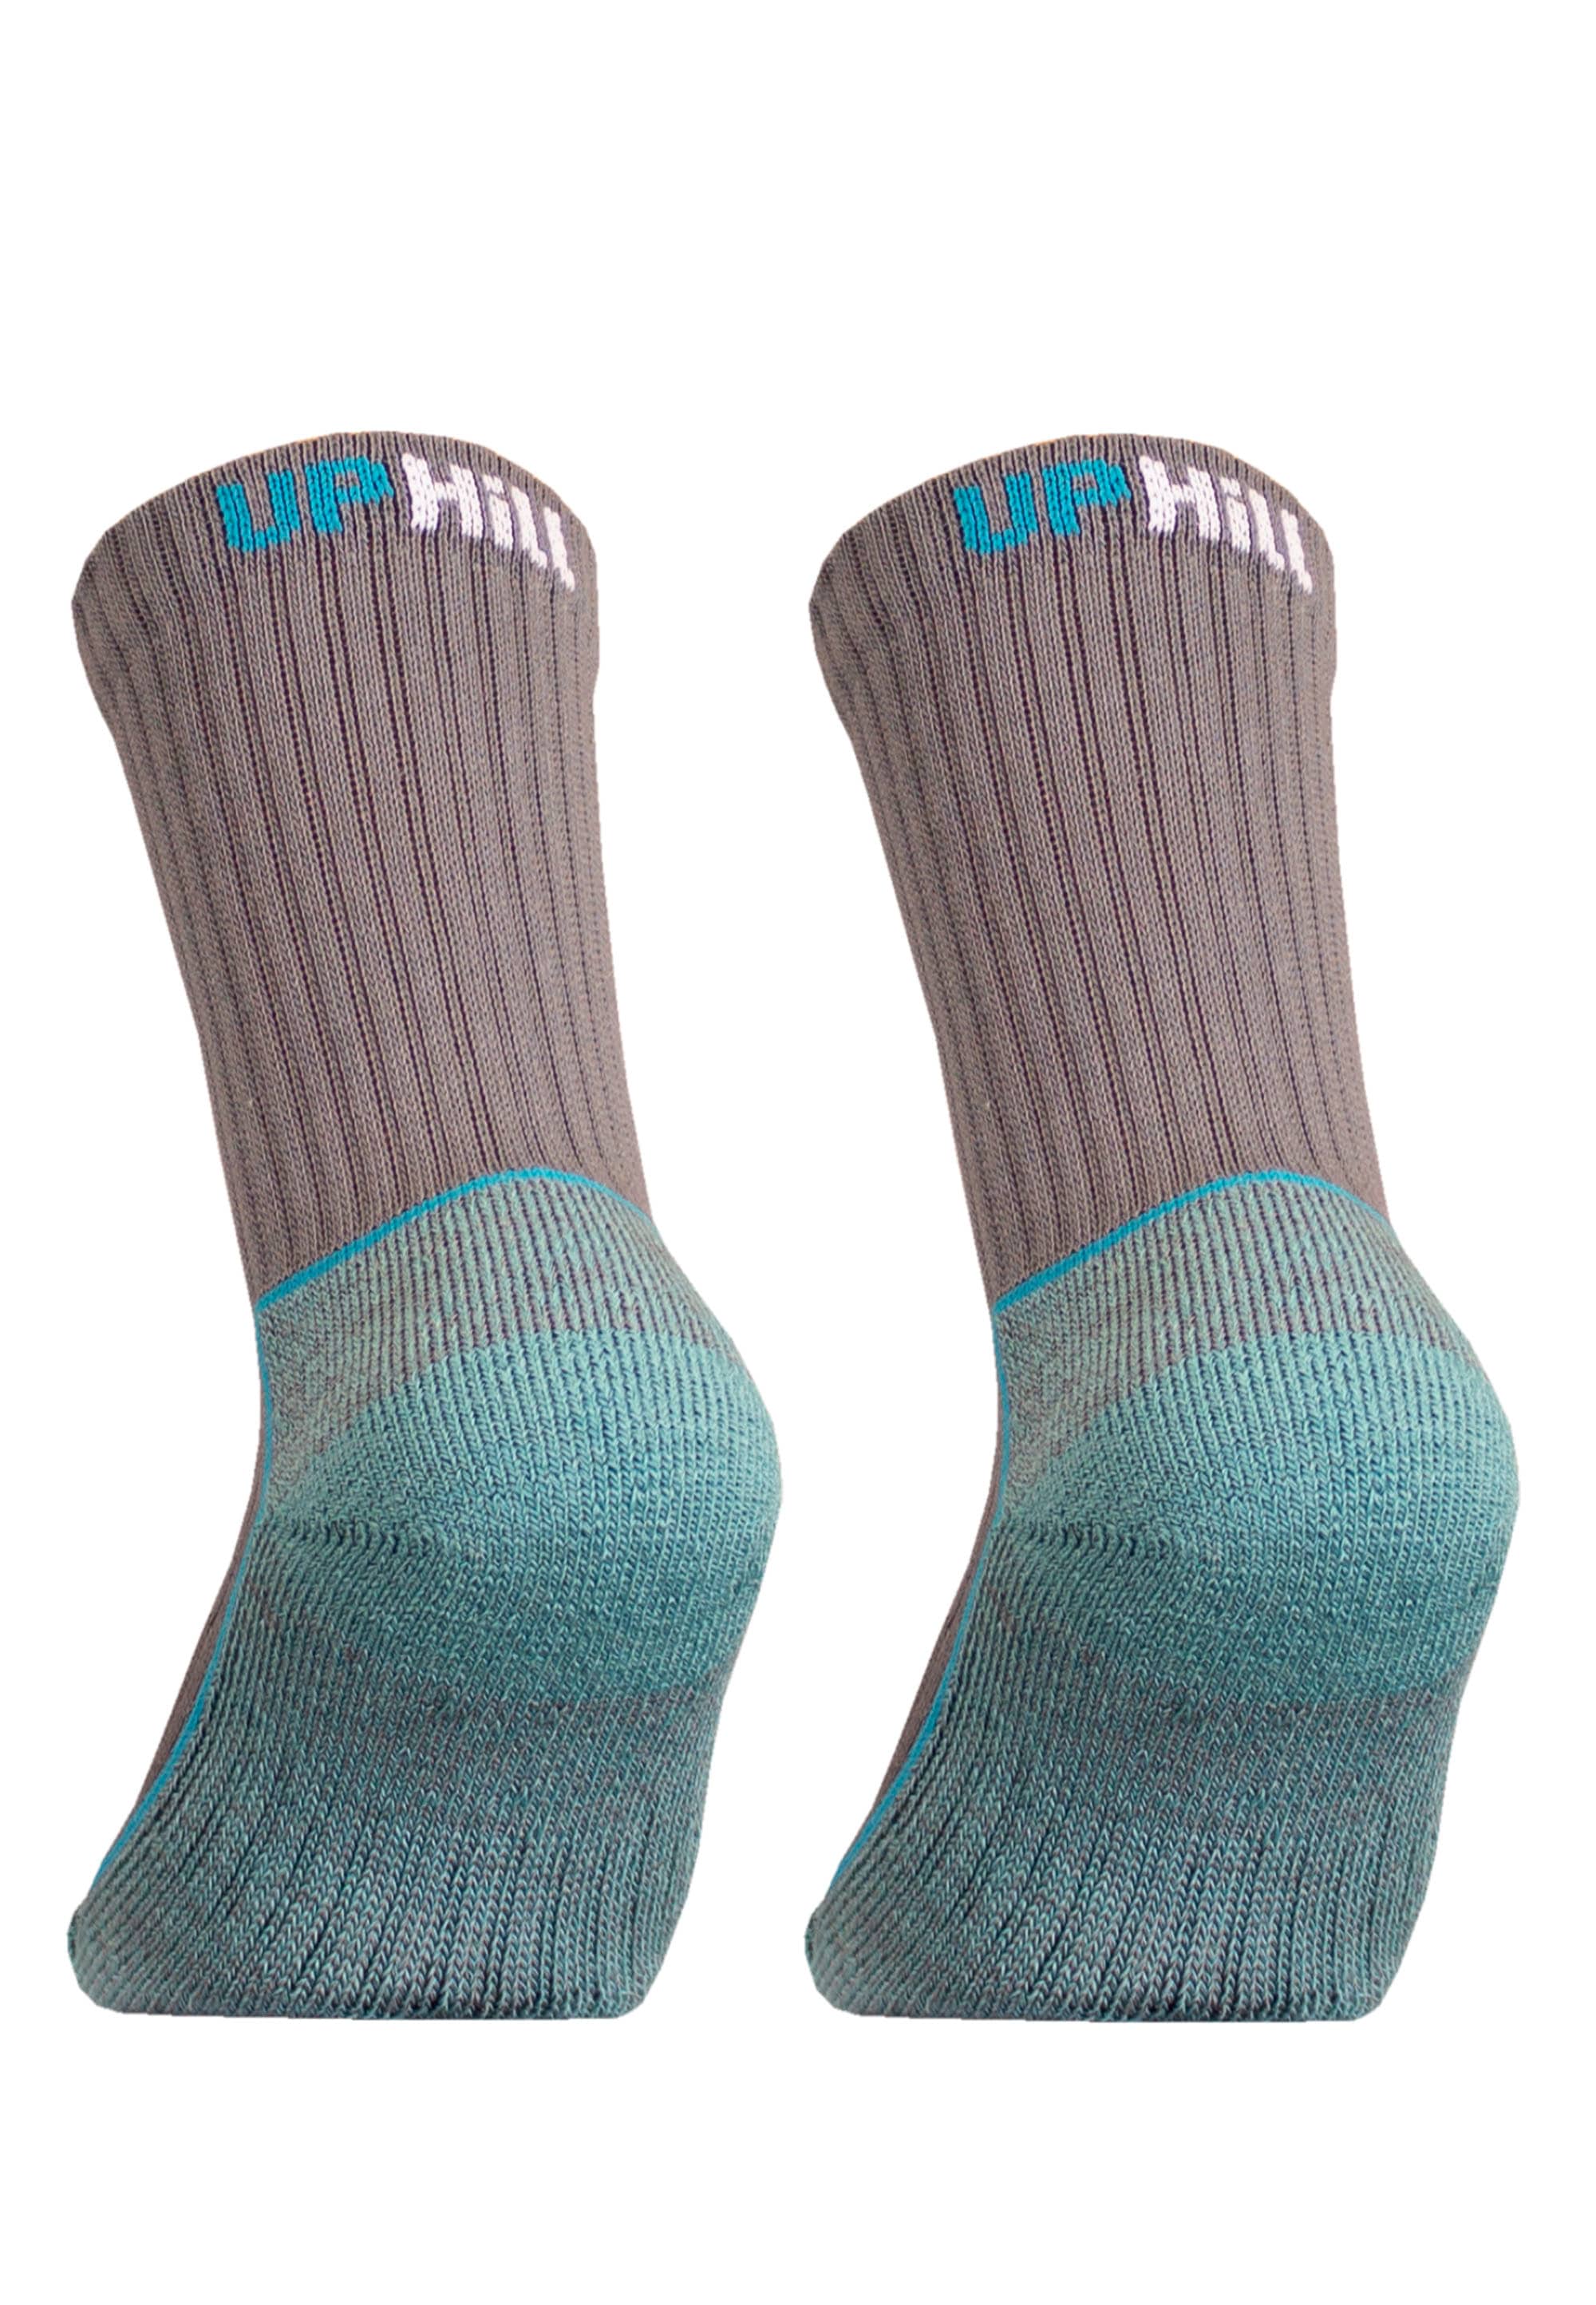 UphillSport Socken »SAANA JR I\'m Flextech-Struktur (2 im Pack«, Onlineshop mit Paar), | 2er walking